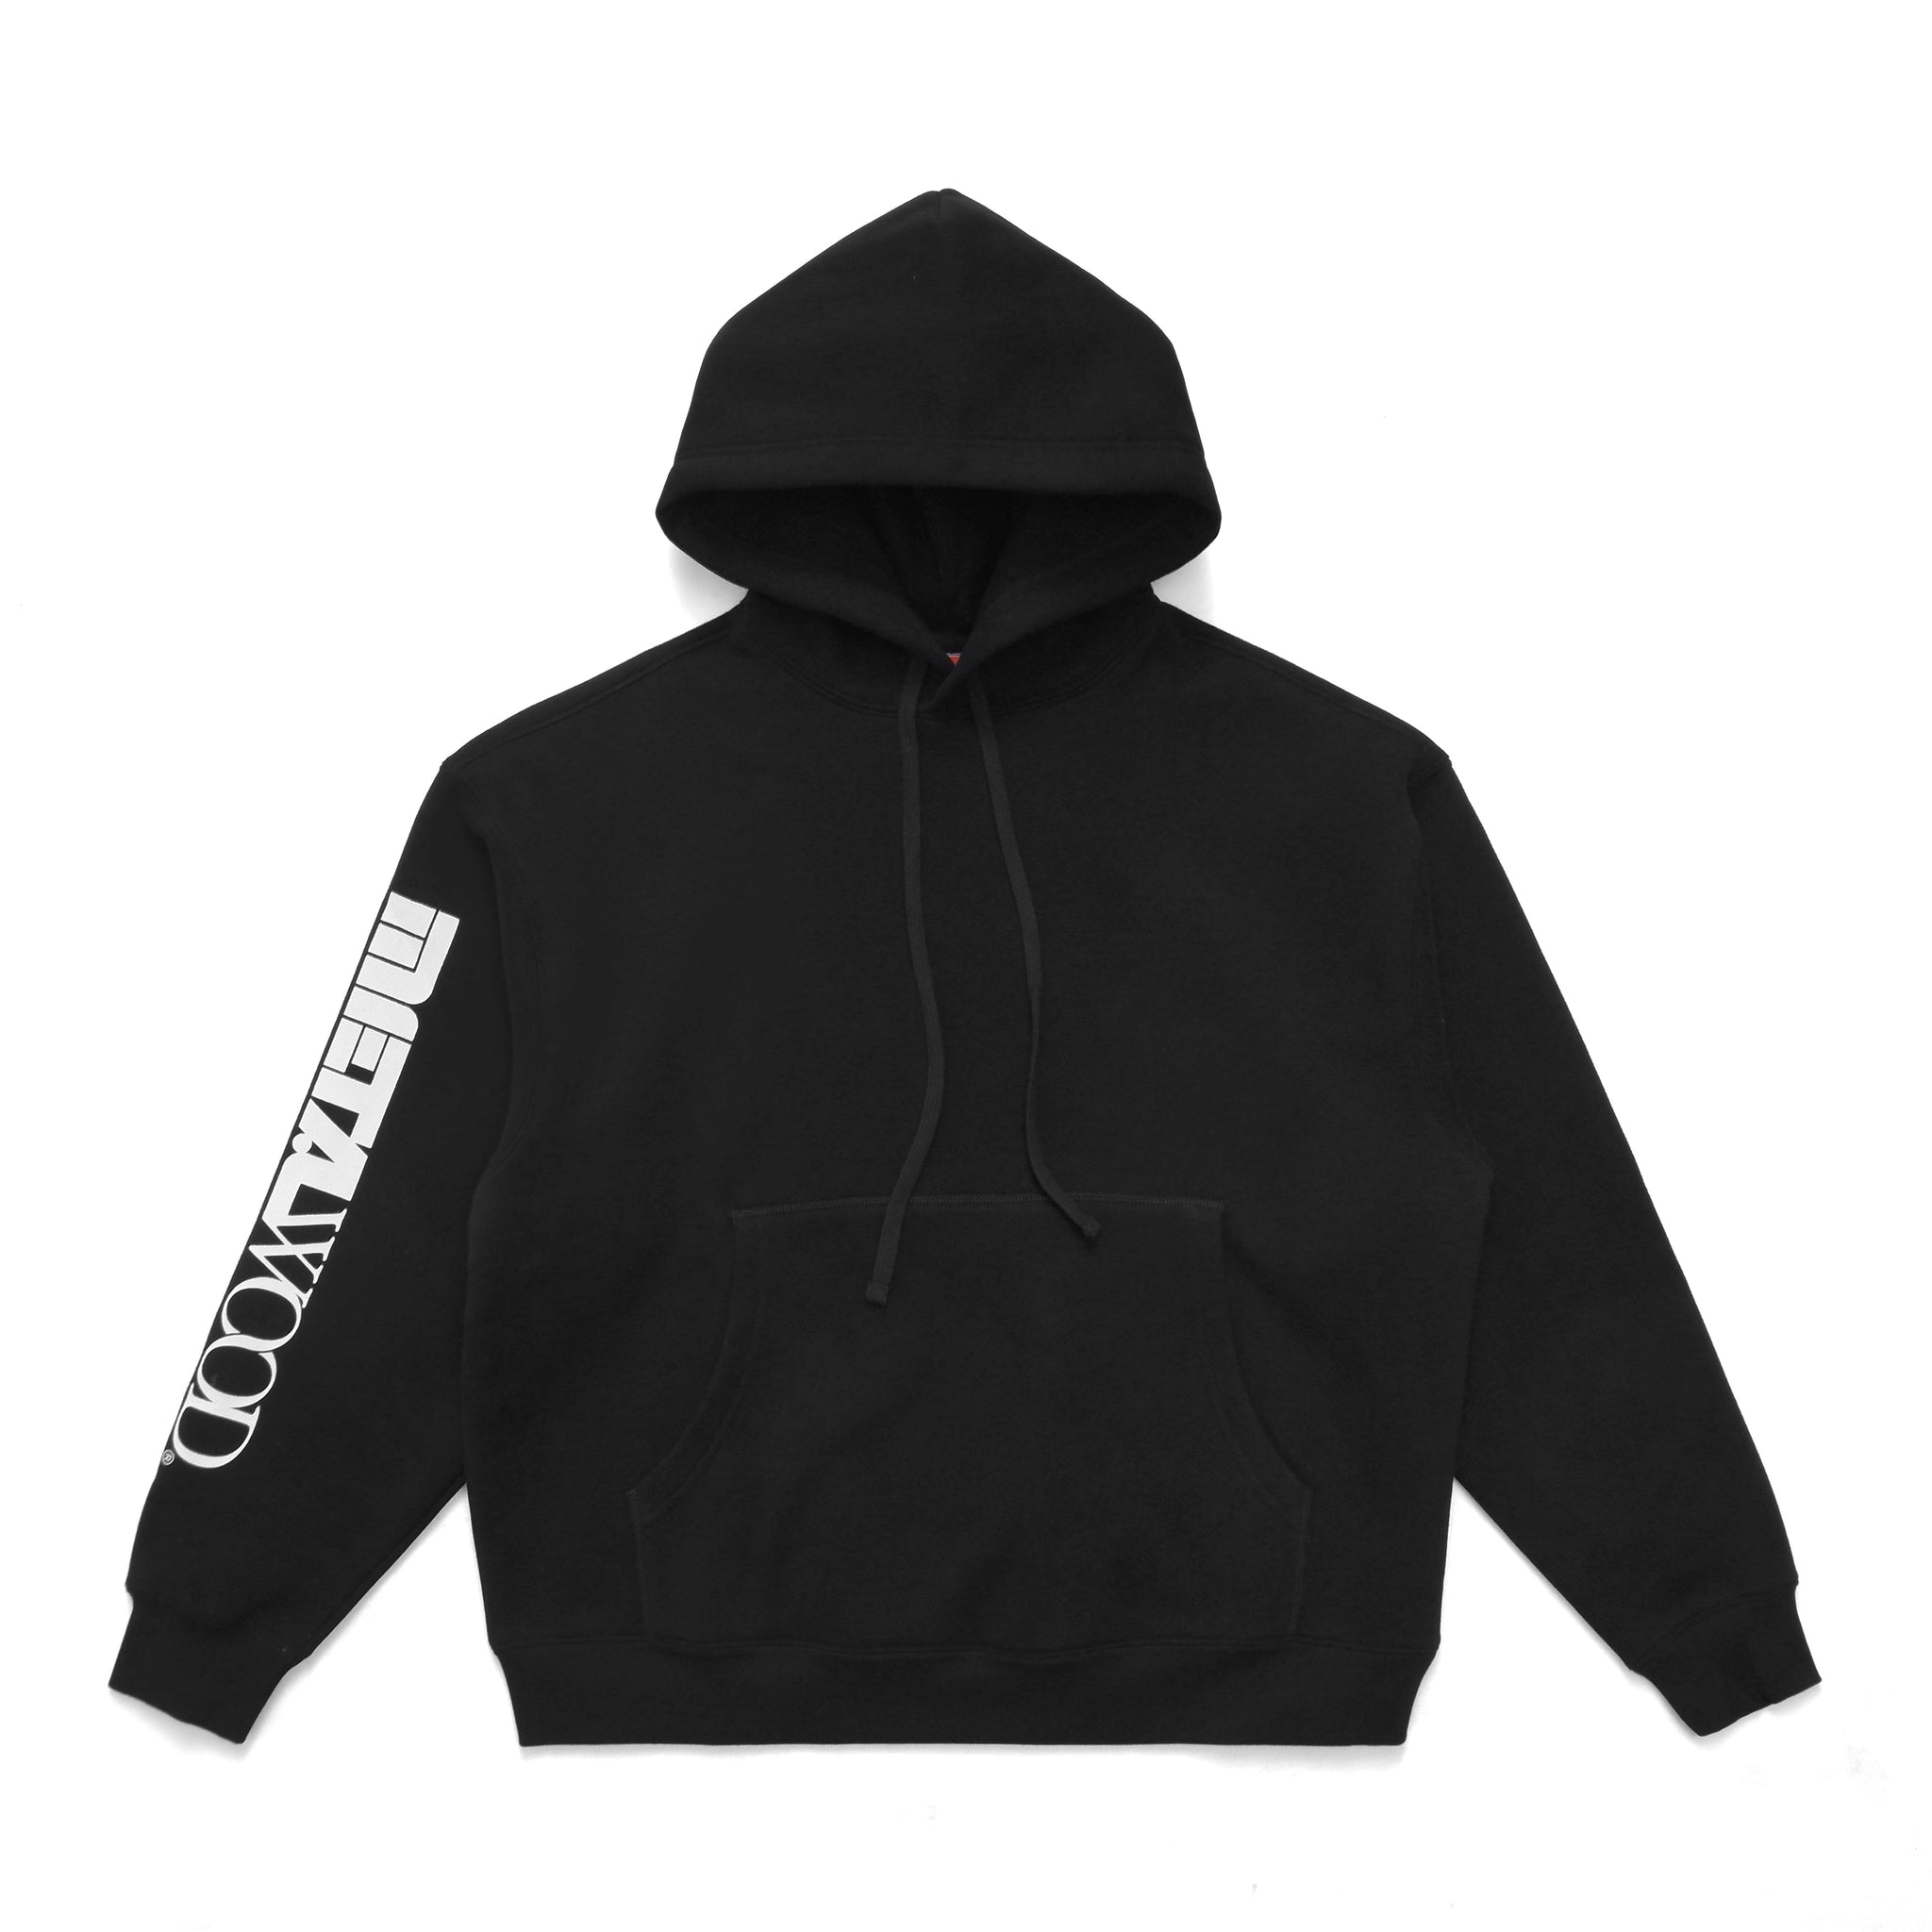 Energy Transfer Hooded Sweatshirt - Black